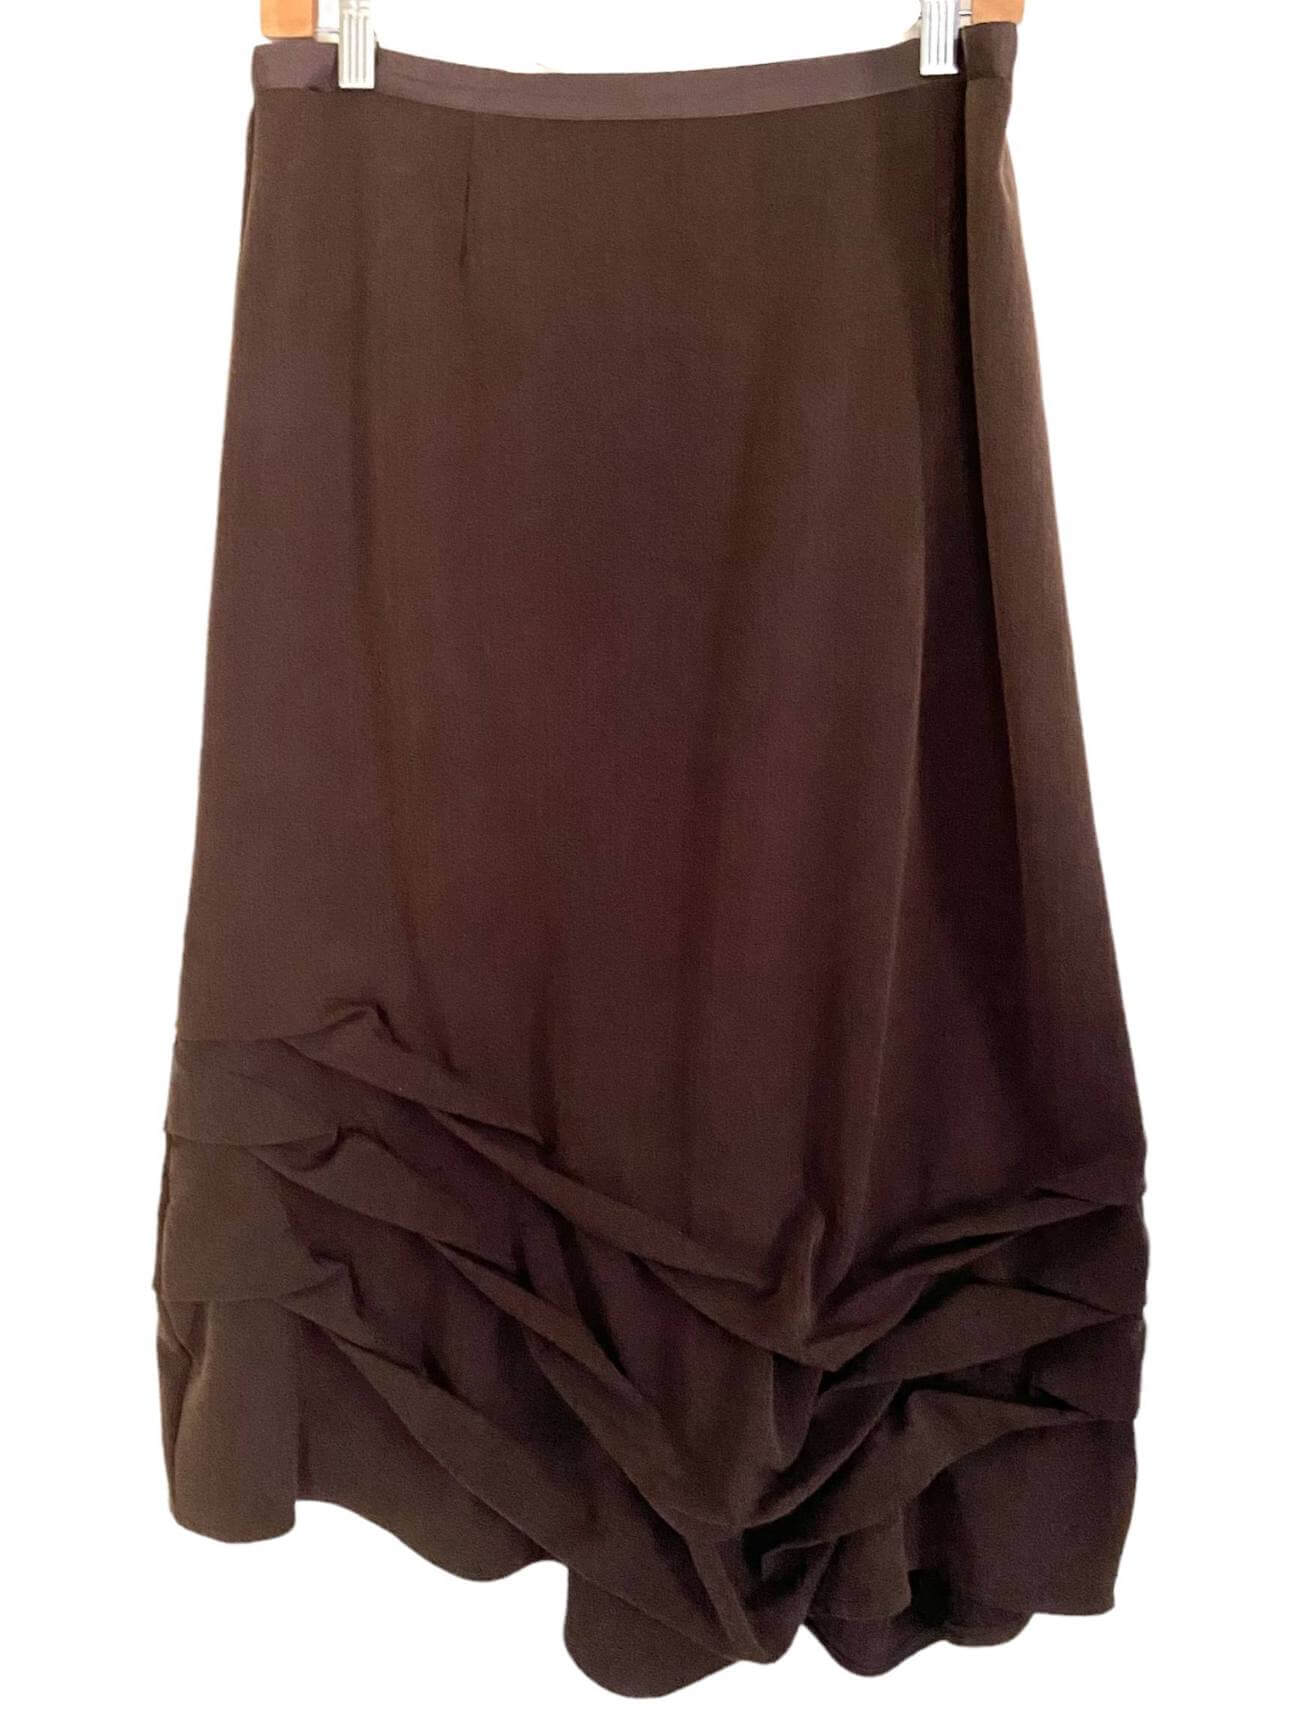 Dark Autumn NEESH by DAR brown bustle skirt